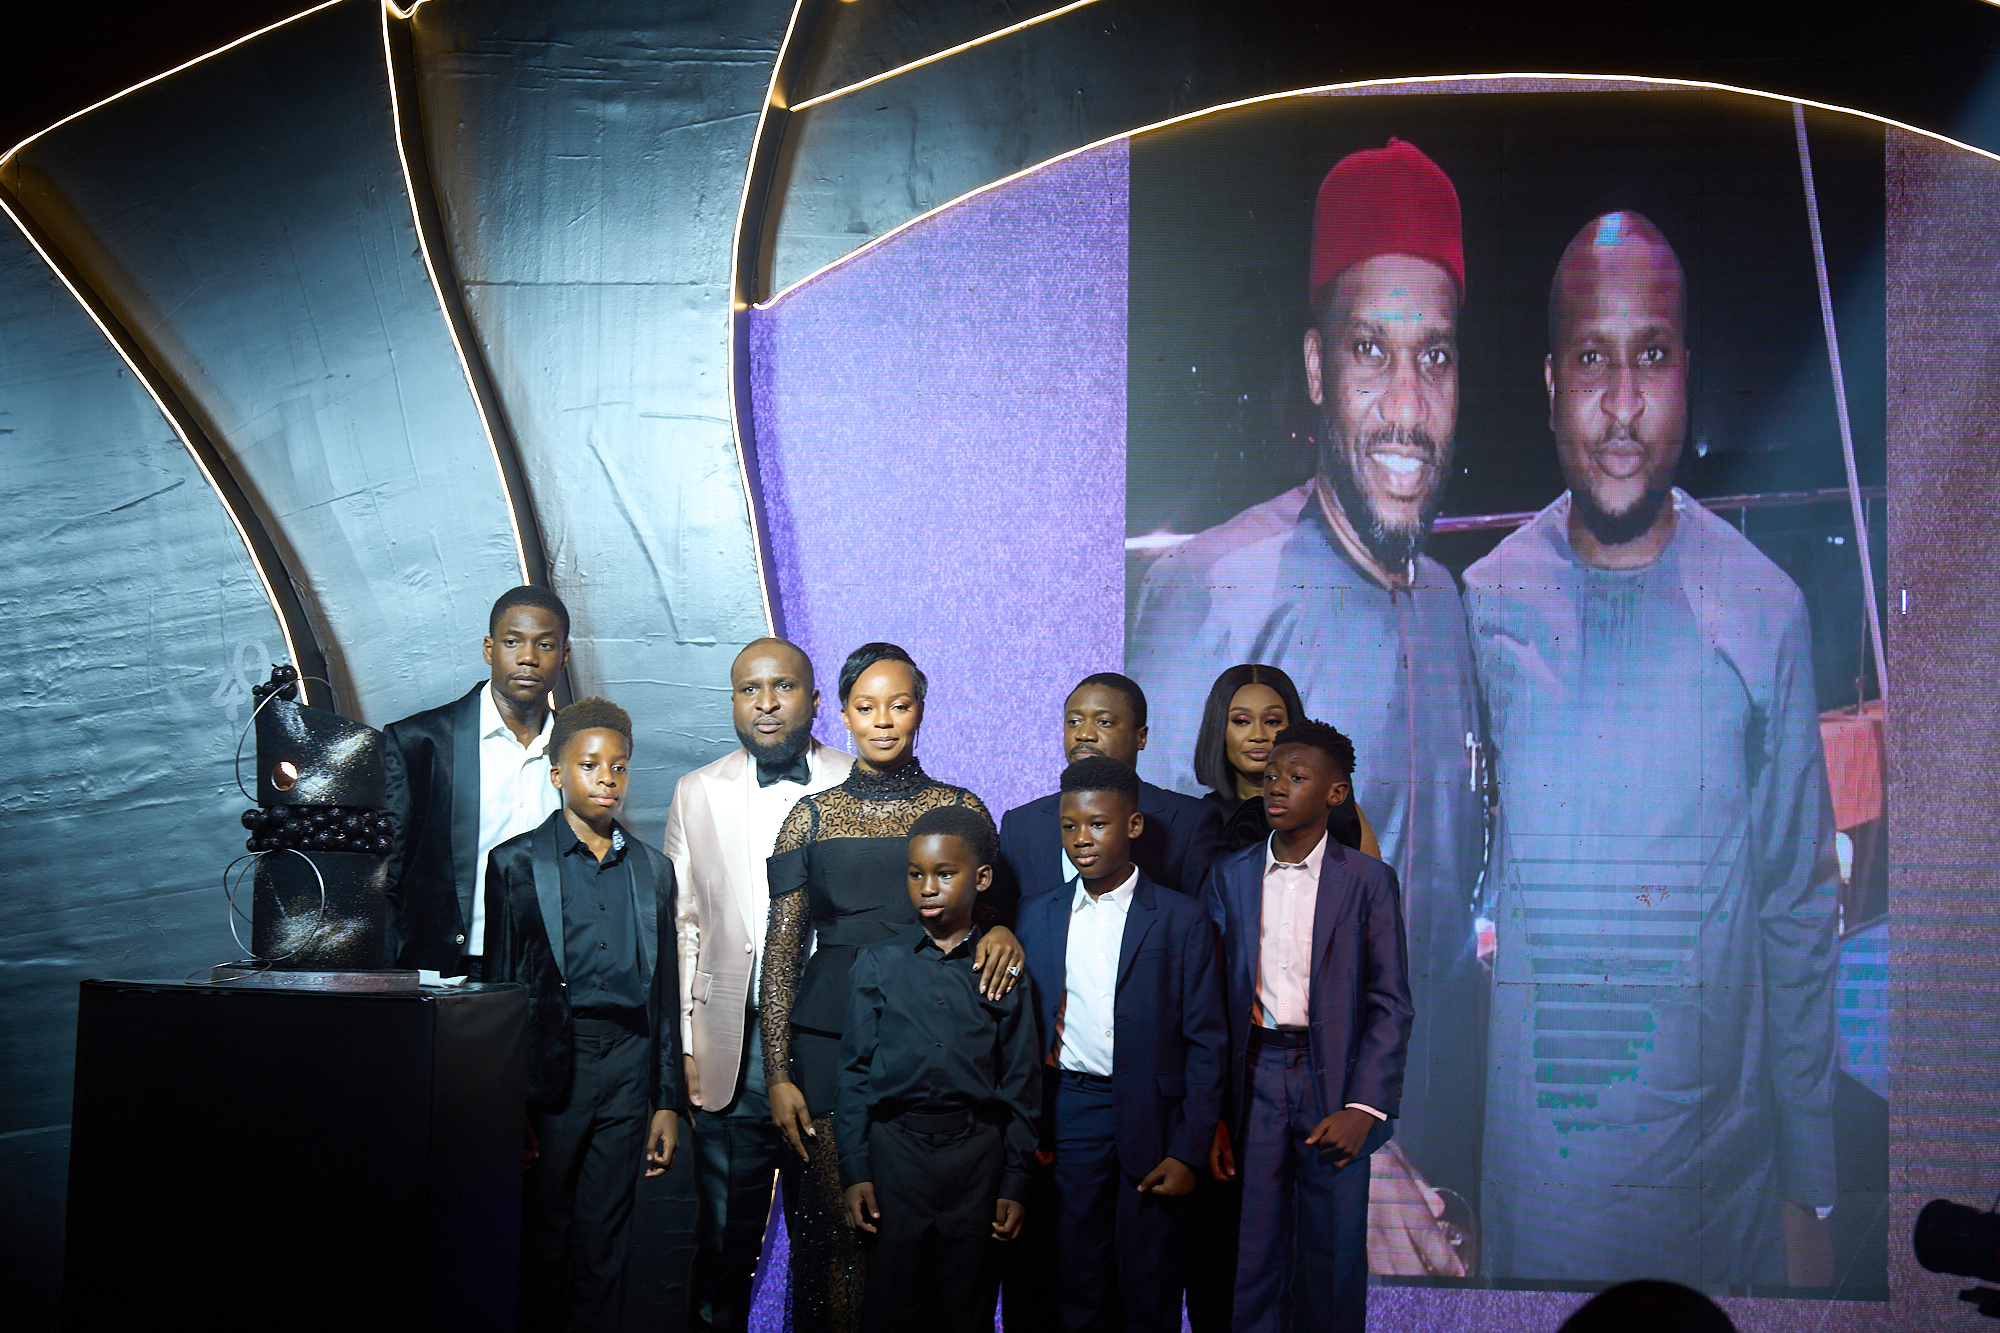 AMS05462 - Photos: Inside Moses Babatope, Film One Co - Founder's 40th Glitz Birthday Celebration